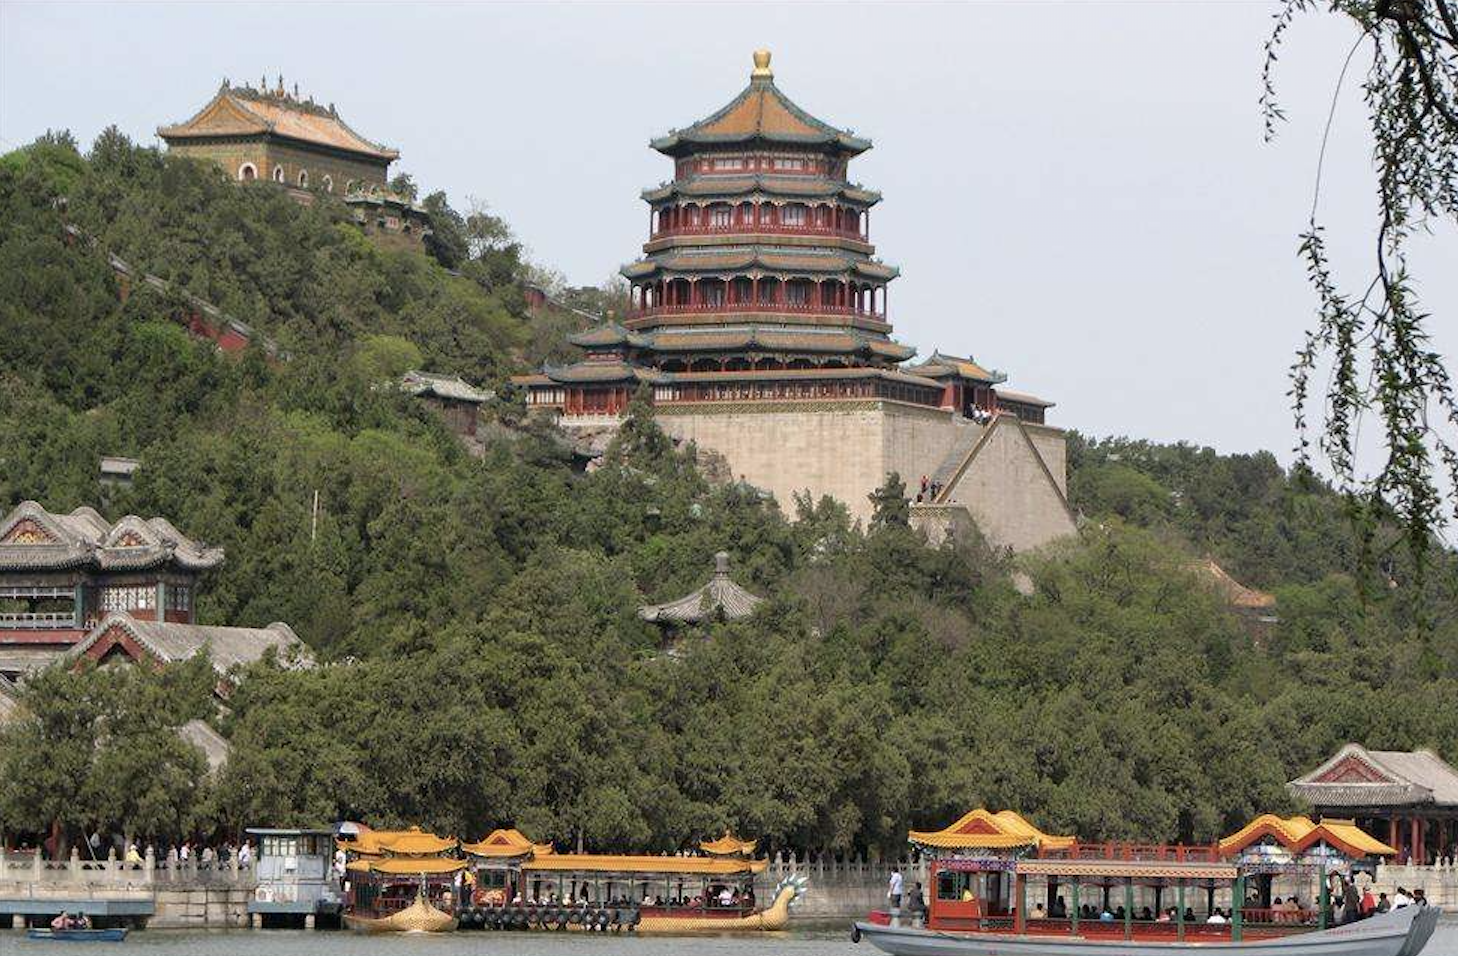 Mutianyu Great Wall &Summer Palace Layover Tour